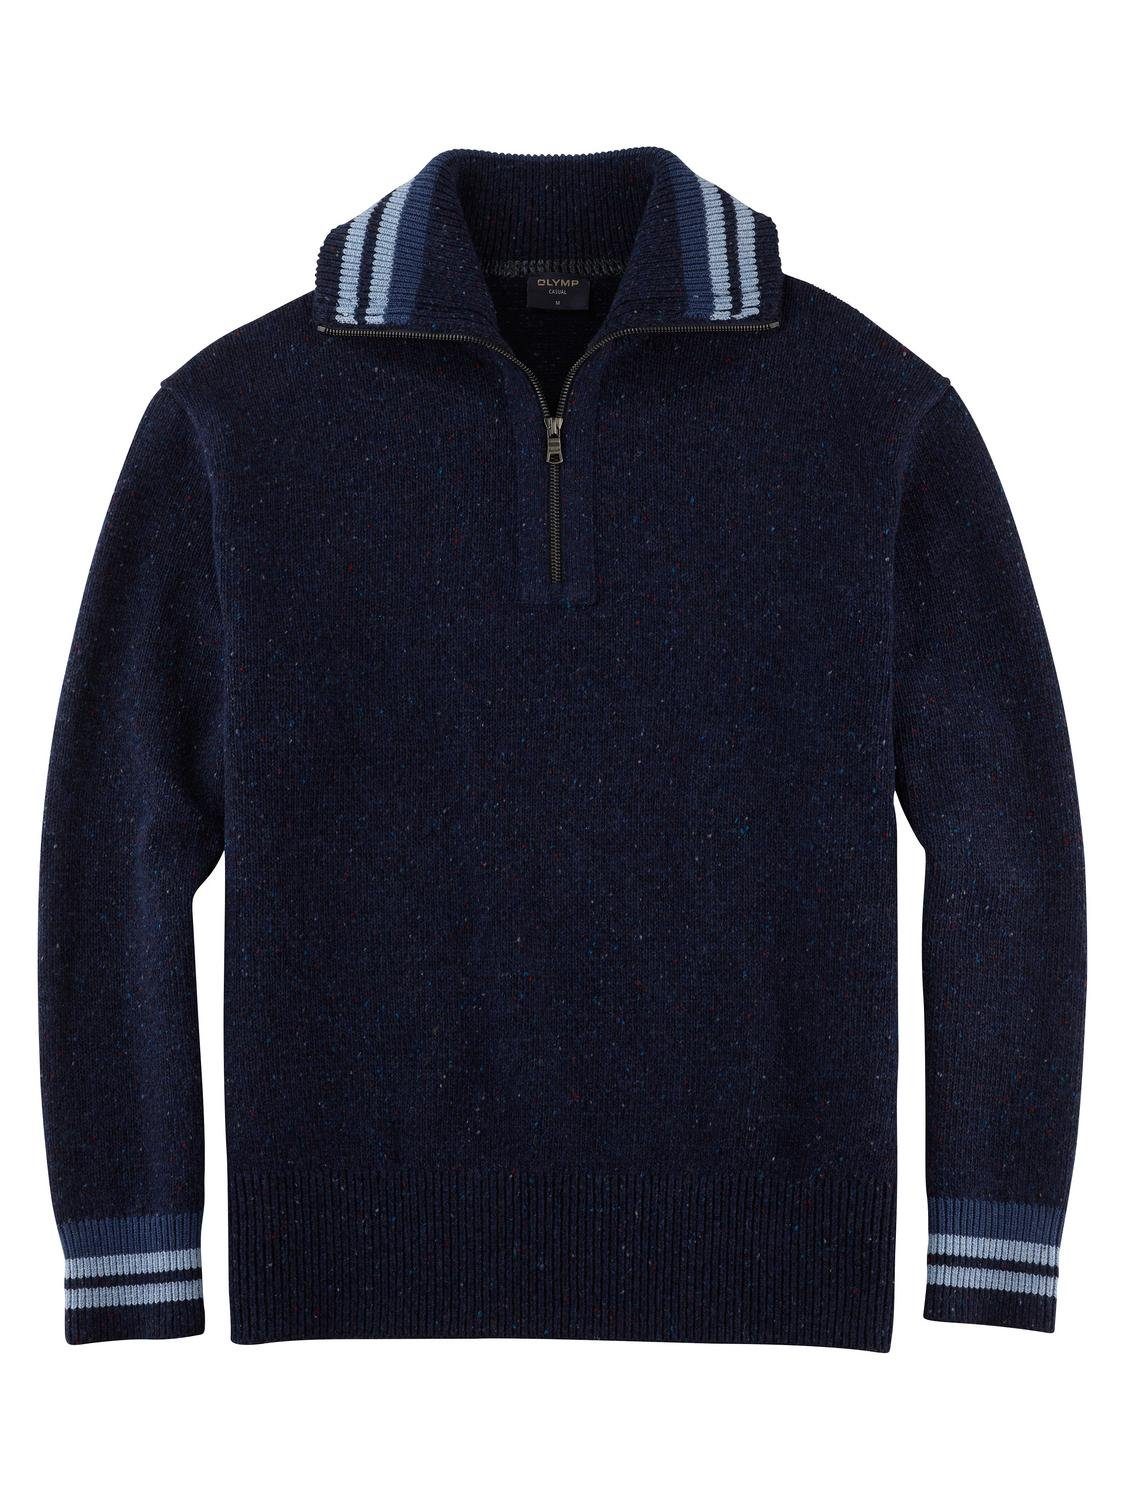 OLYMP Sweatshirt 5332/45 Pullover